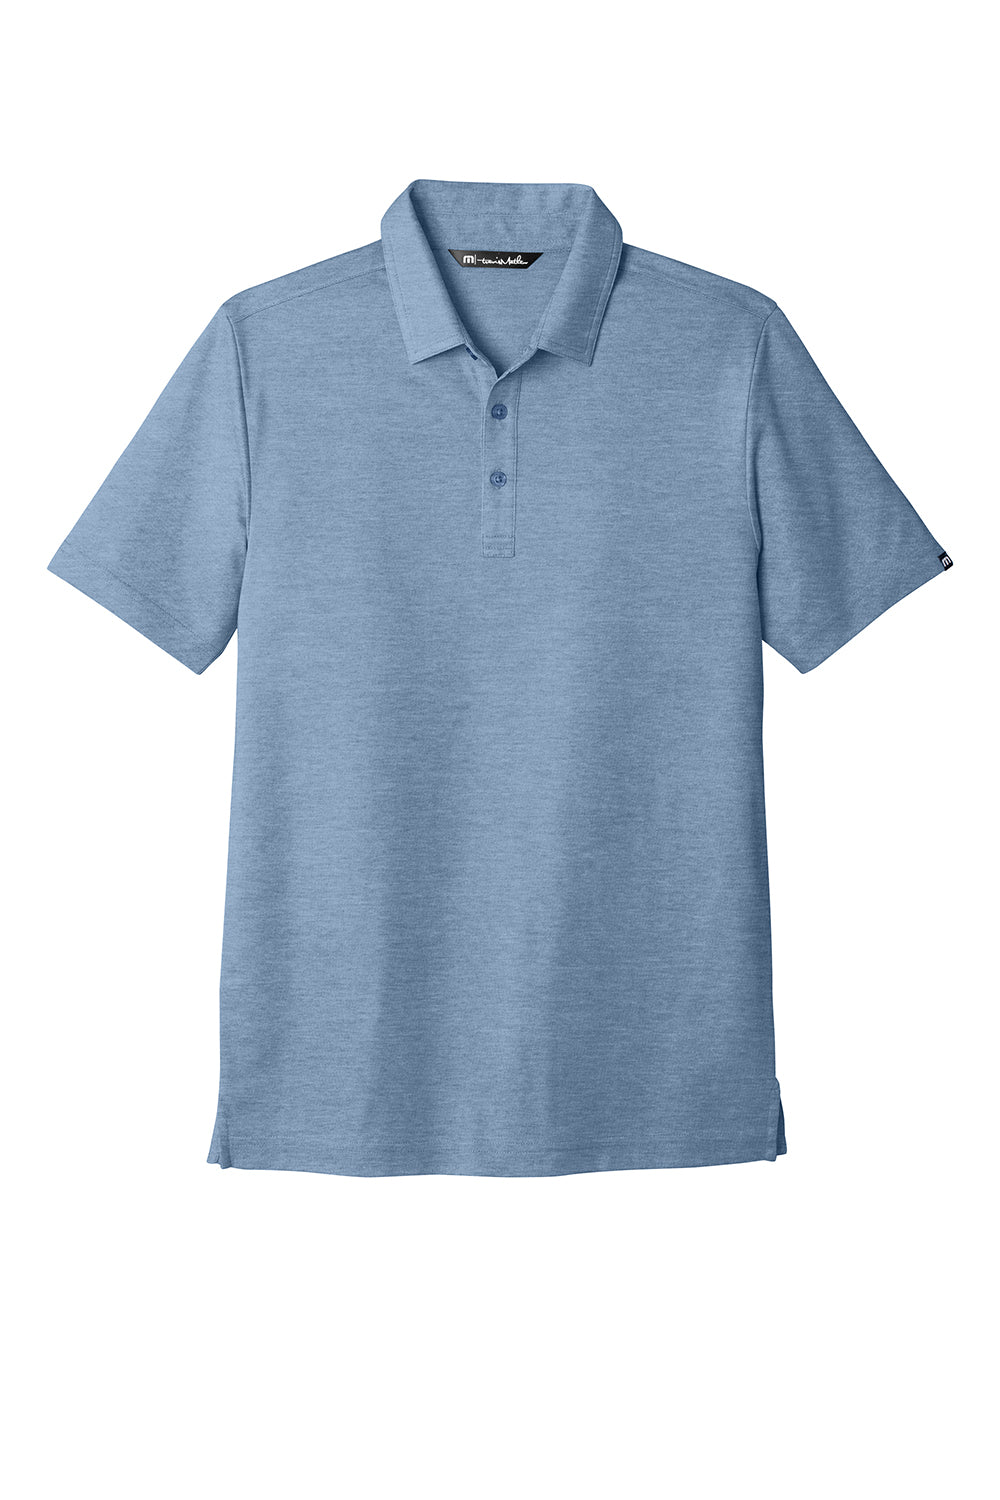 TravisMathew TM1MU412 Mens Oceanside Moisture Wicking Short Sleeve Polo Shirt Heather Classic Blue Flat Front